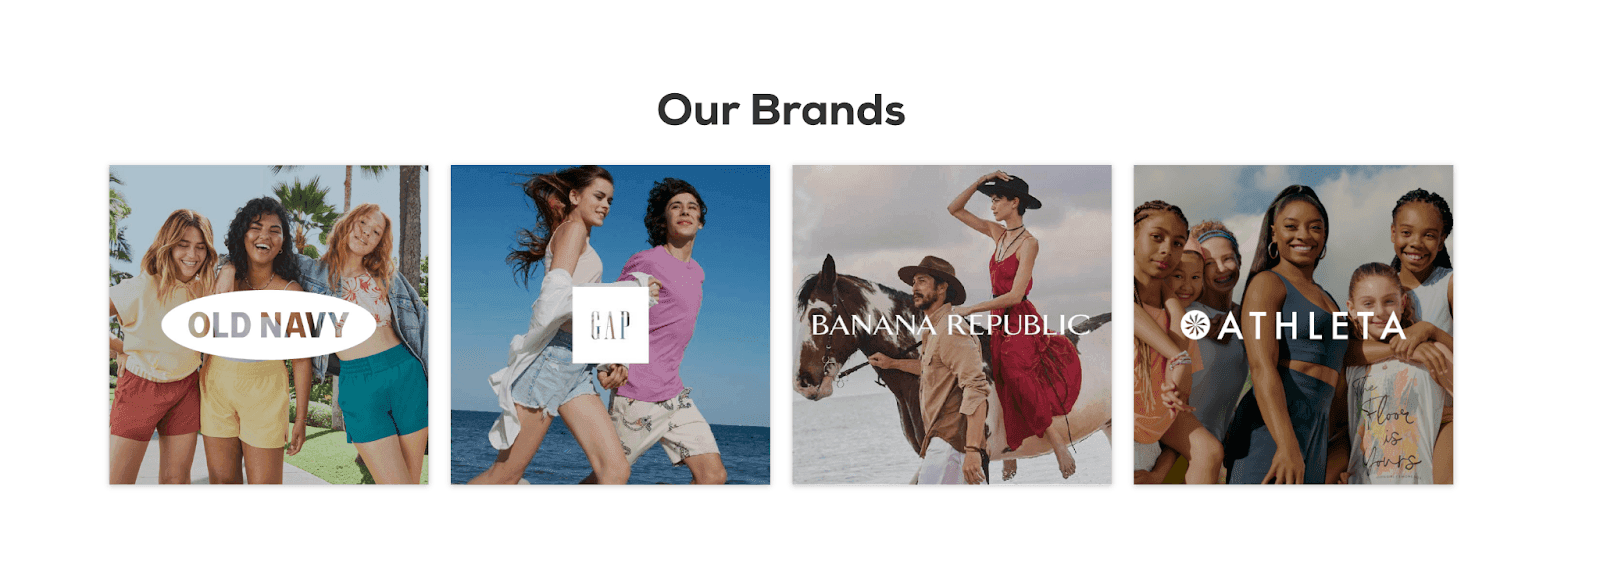 Our brands - Old Navy, Gap, Banana Republic, Athleta